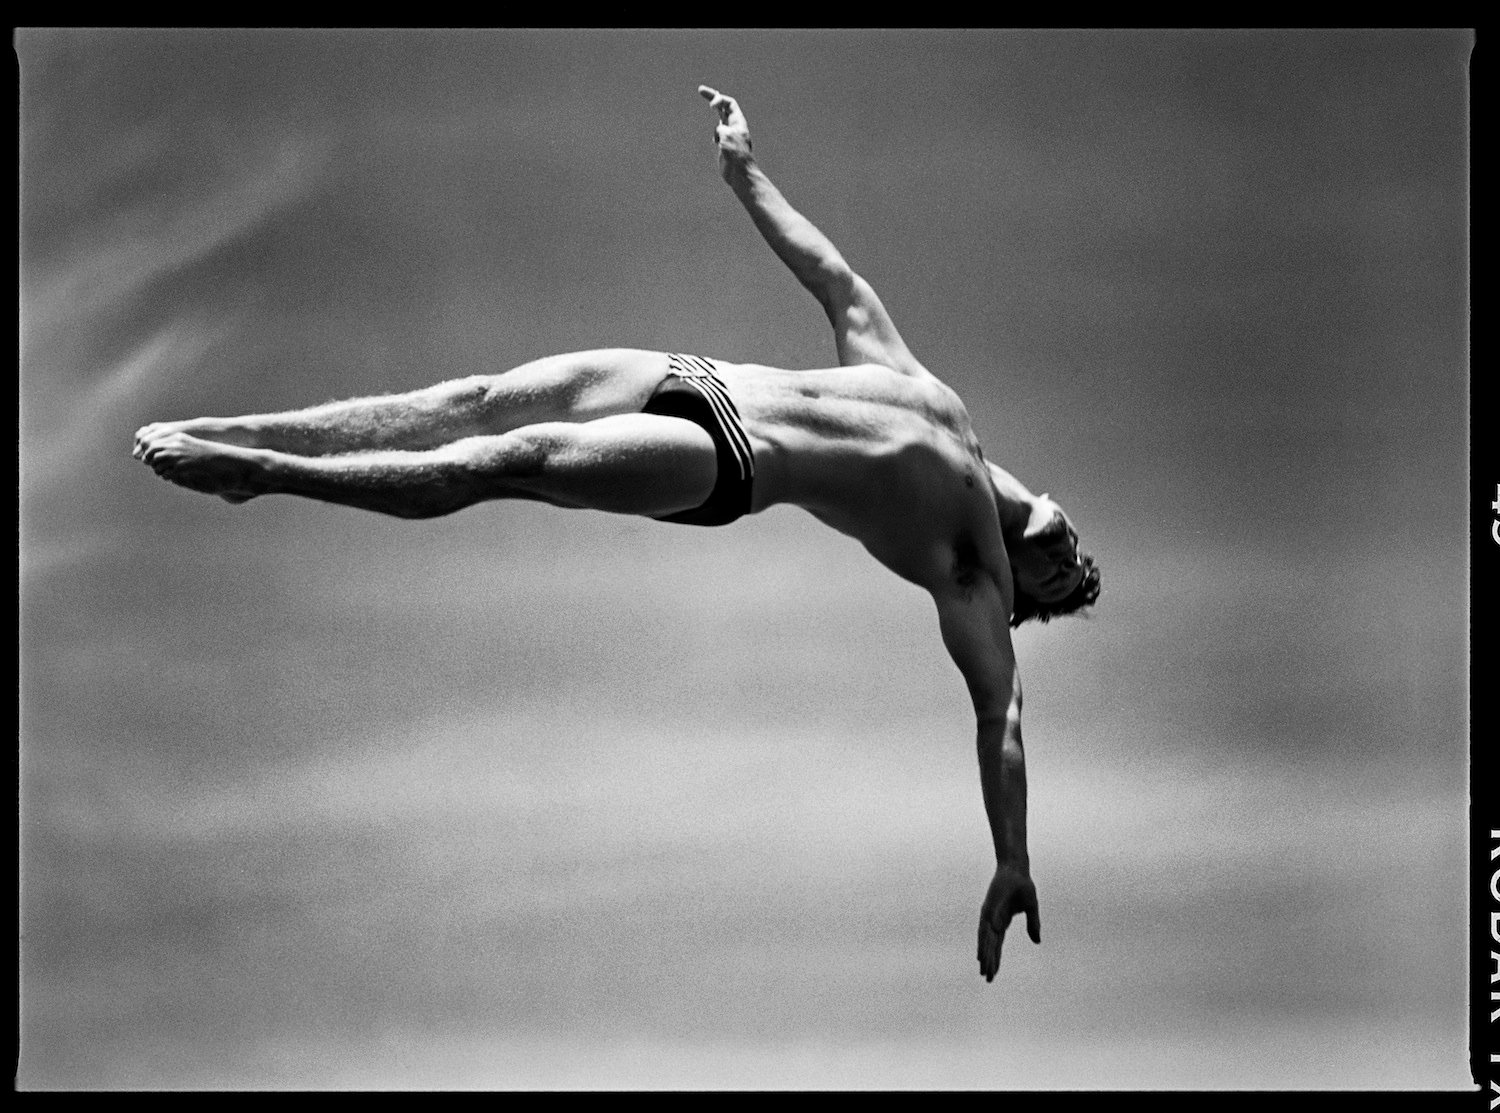 David Burnett, Platform diving, Men, Fort Lauderdale, Florida, May 1996. Courtesy of David Burnett/Anastasia Photo/Contact Press Images.